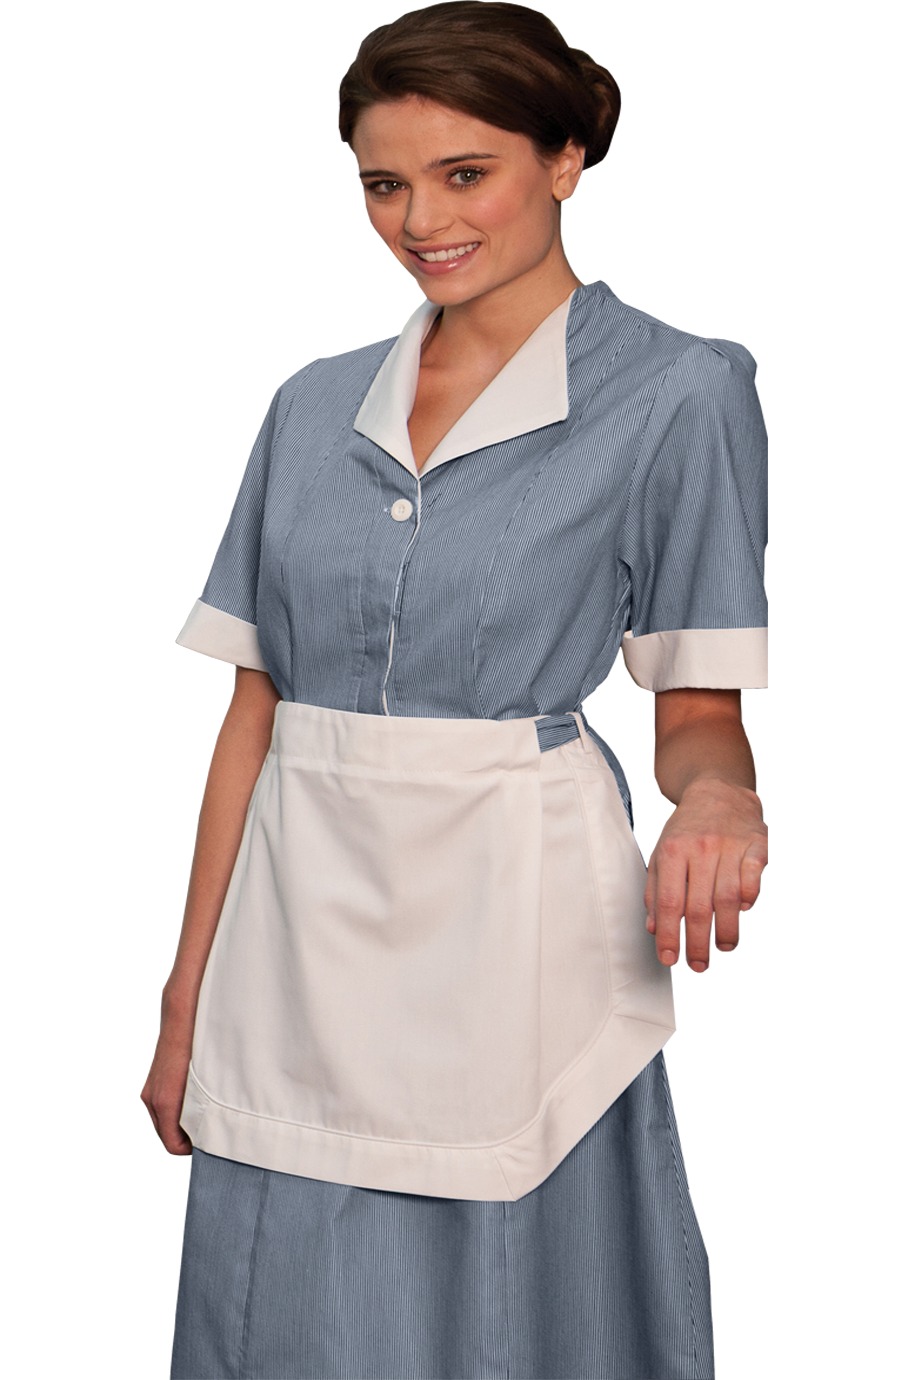 Edwards Garment 9895 - Women's Junior Cord Housekeeping Dress